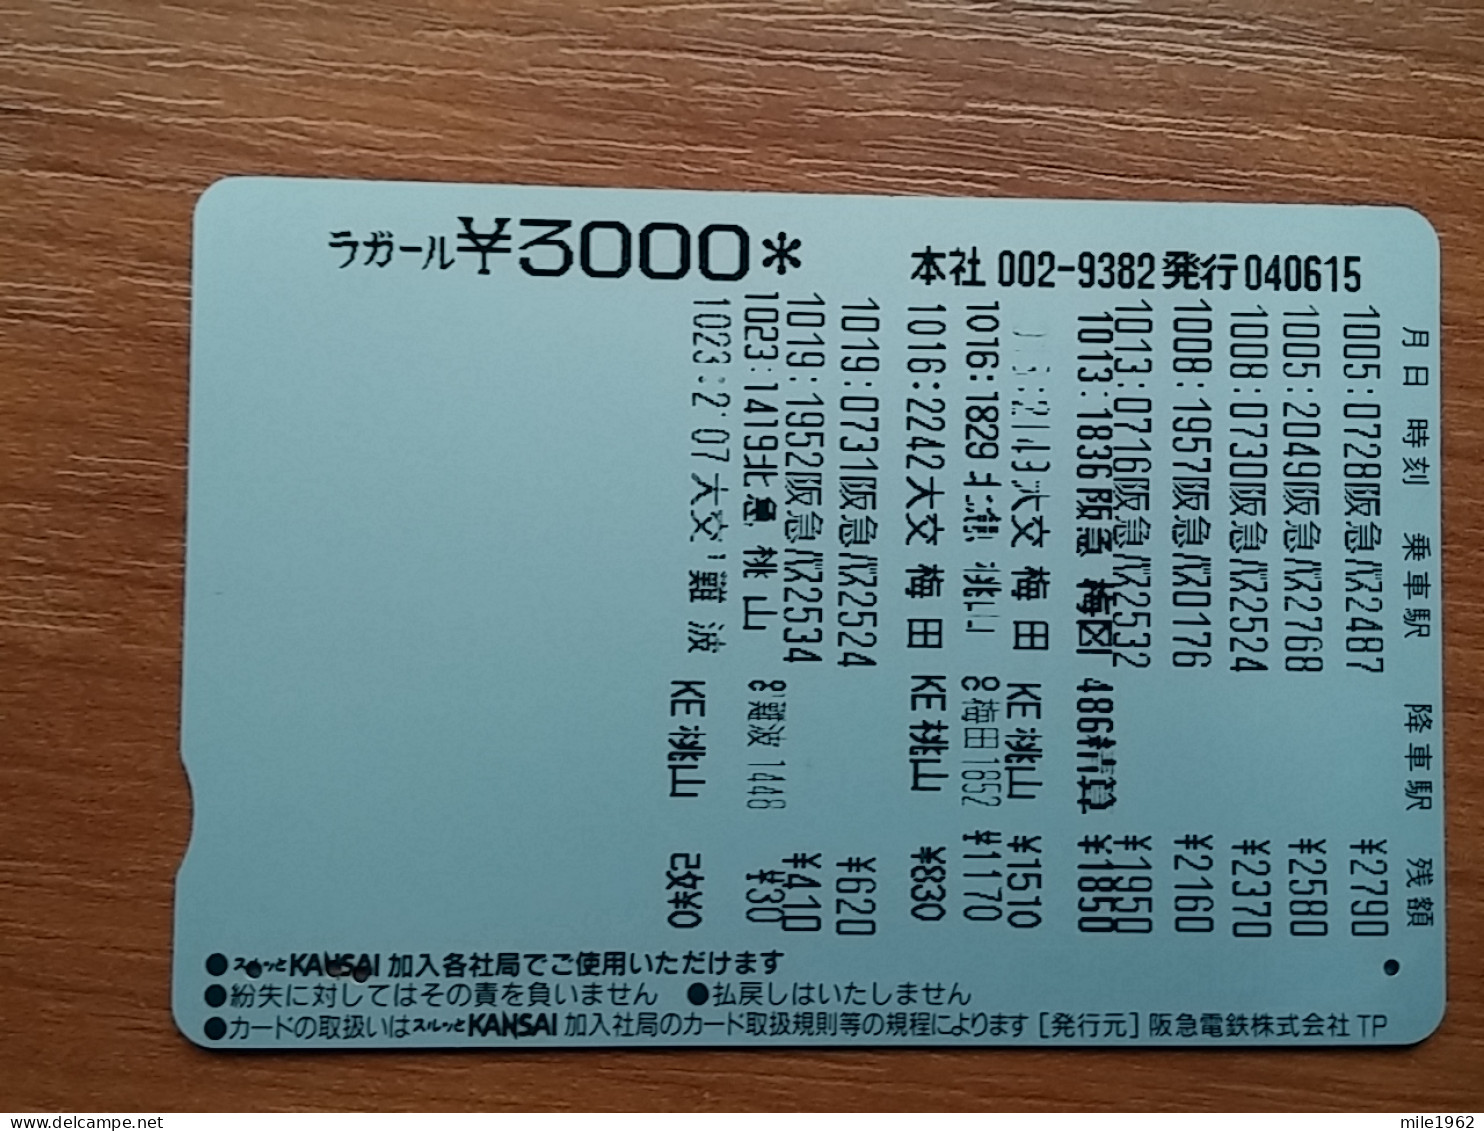 T-398 - JAPAN, Japon, Nipon, Carte Prepayee, Prepaid Card, Dog, Chien - Hunde